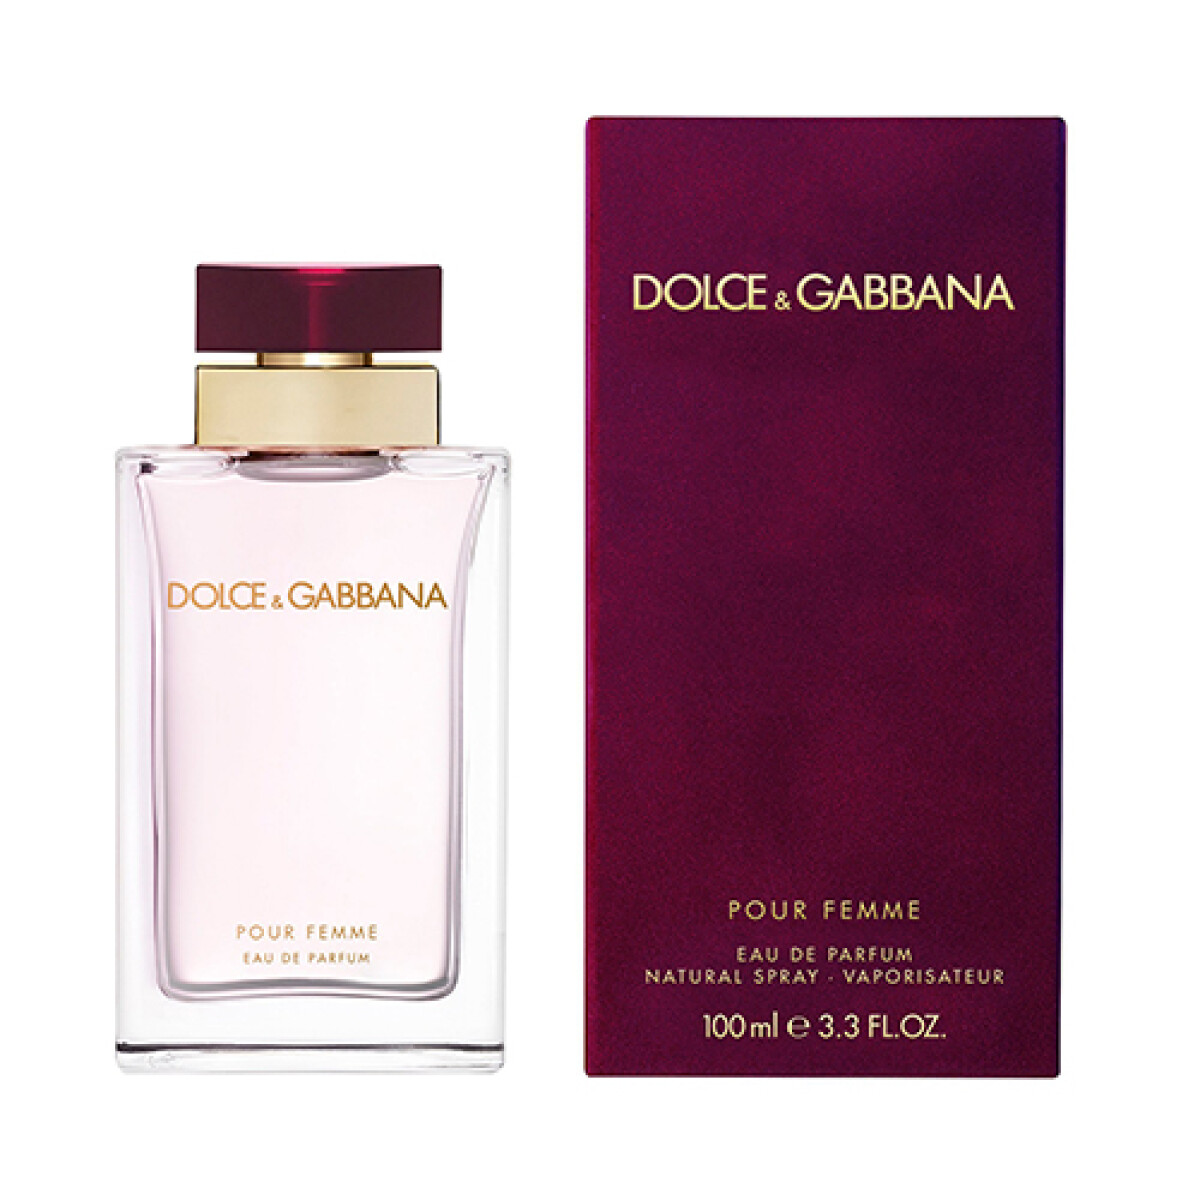 Dolce & Gabbana pour femme - 100 ml 